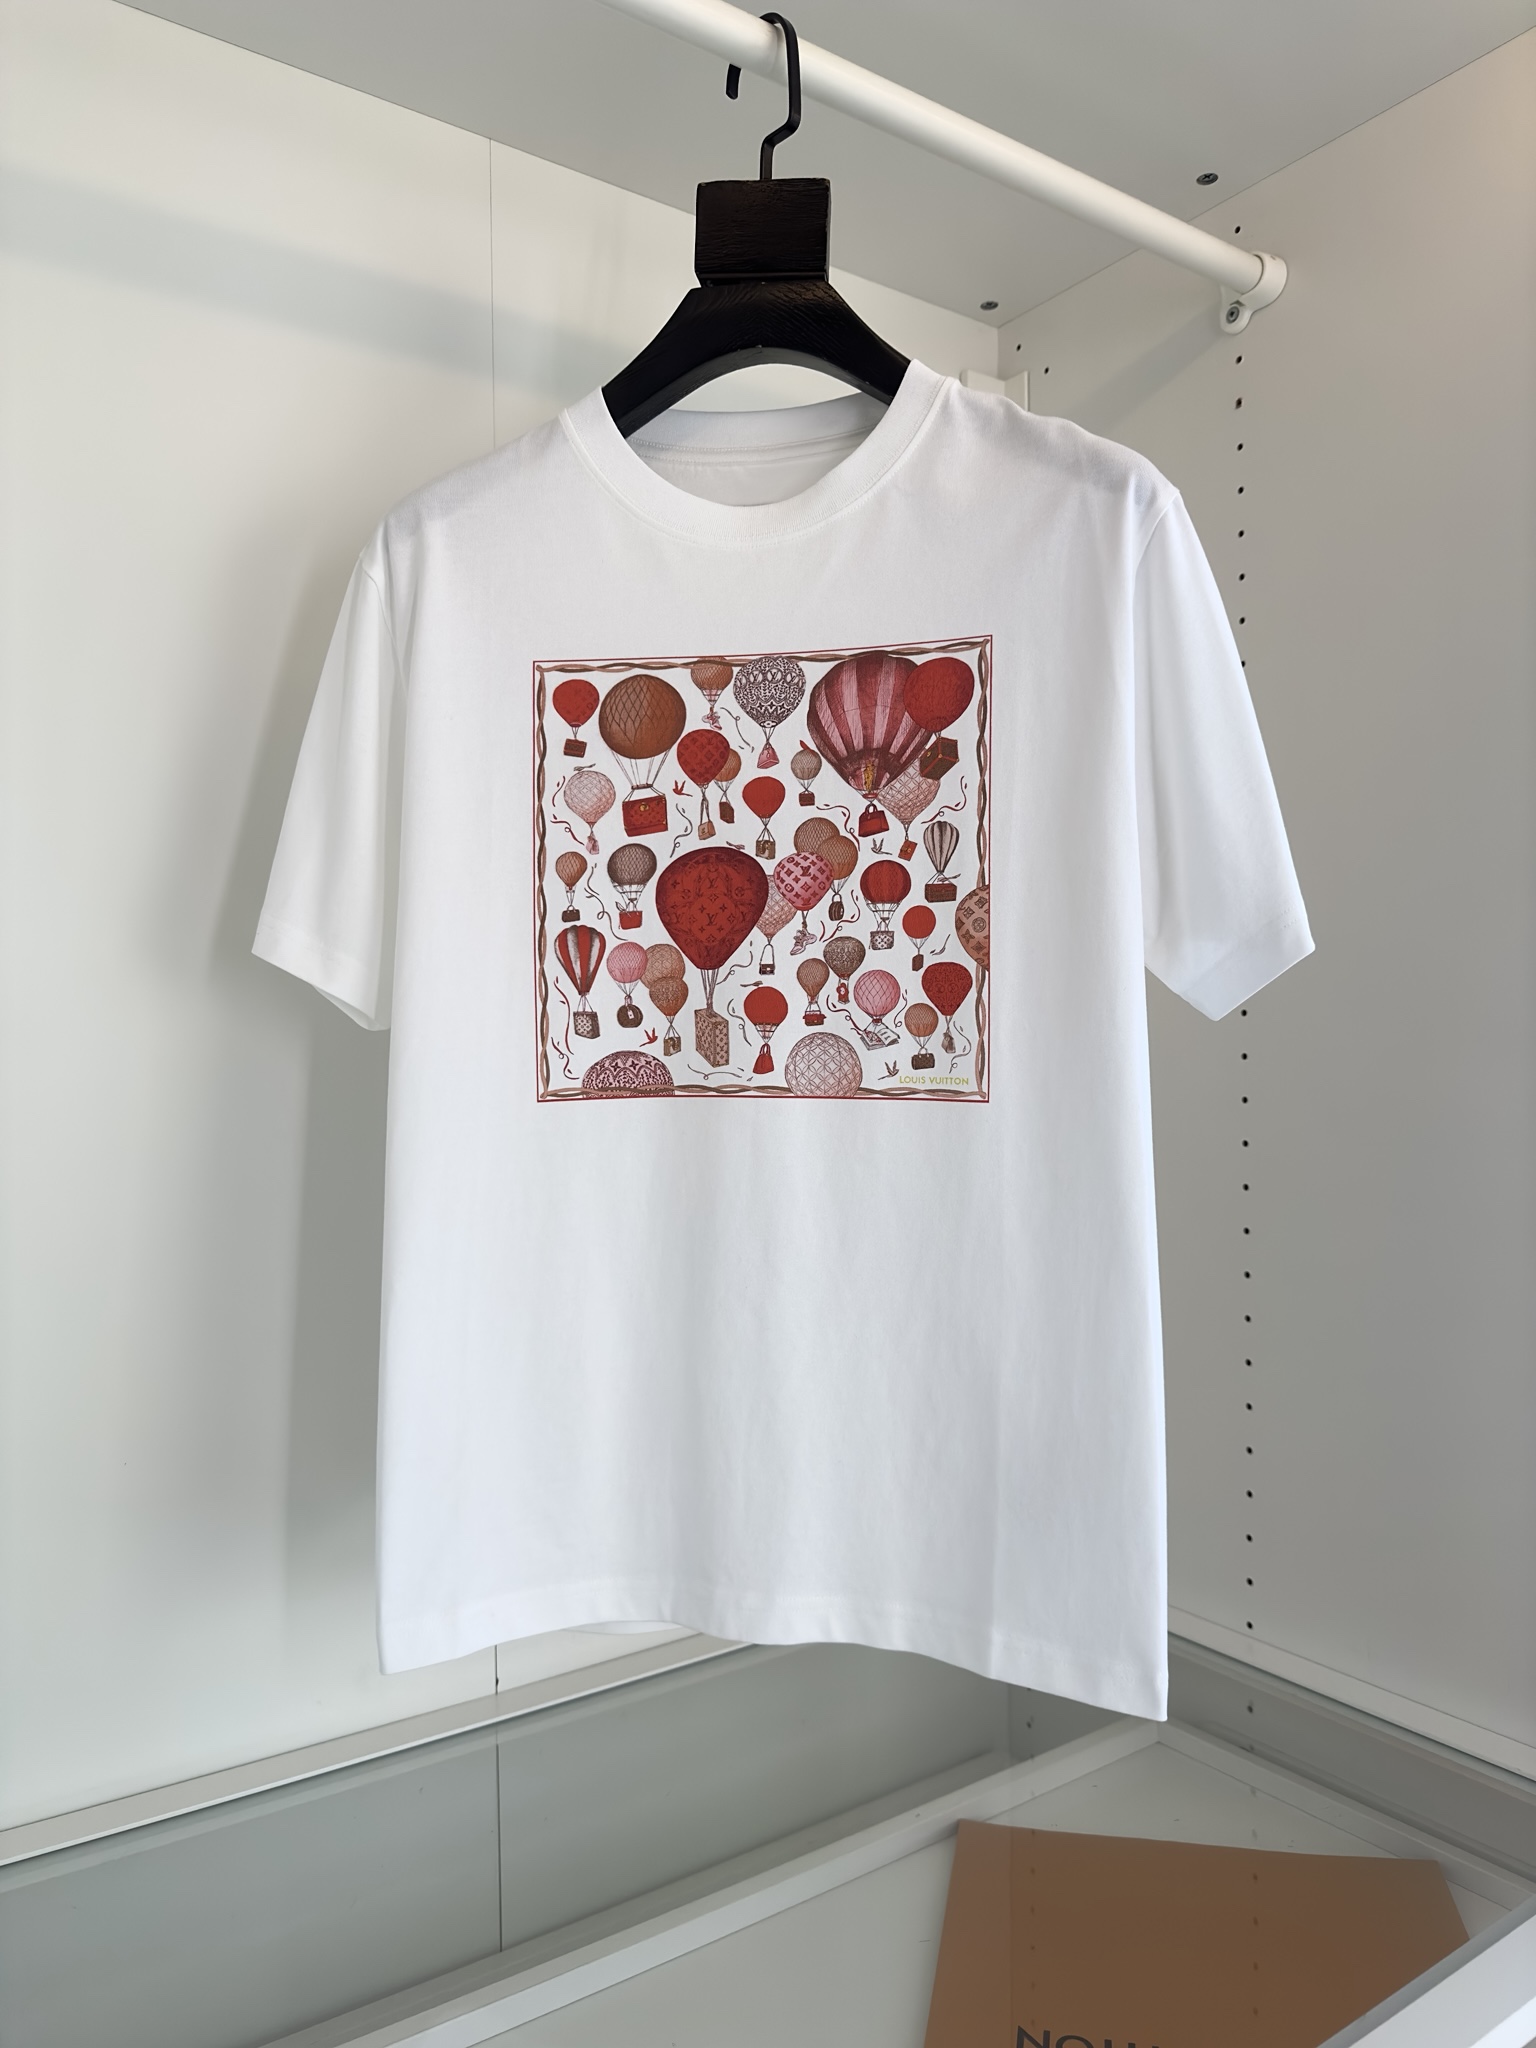 Louis Vuitton Clothing T-Shirt Black White Printing Cotton Knitting Spring/Summer Collection Fashion Short Sleeve